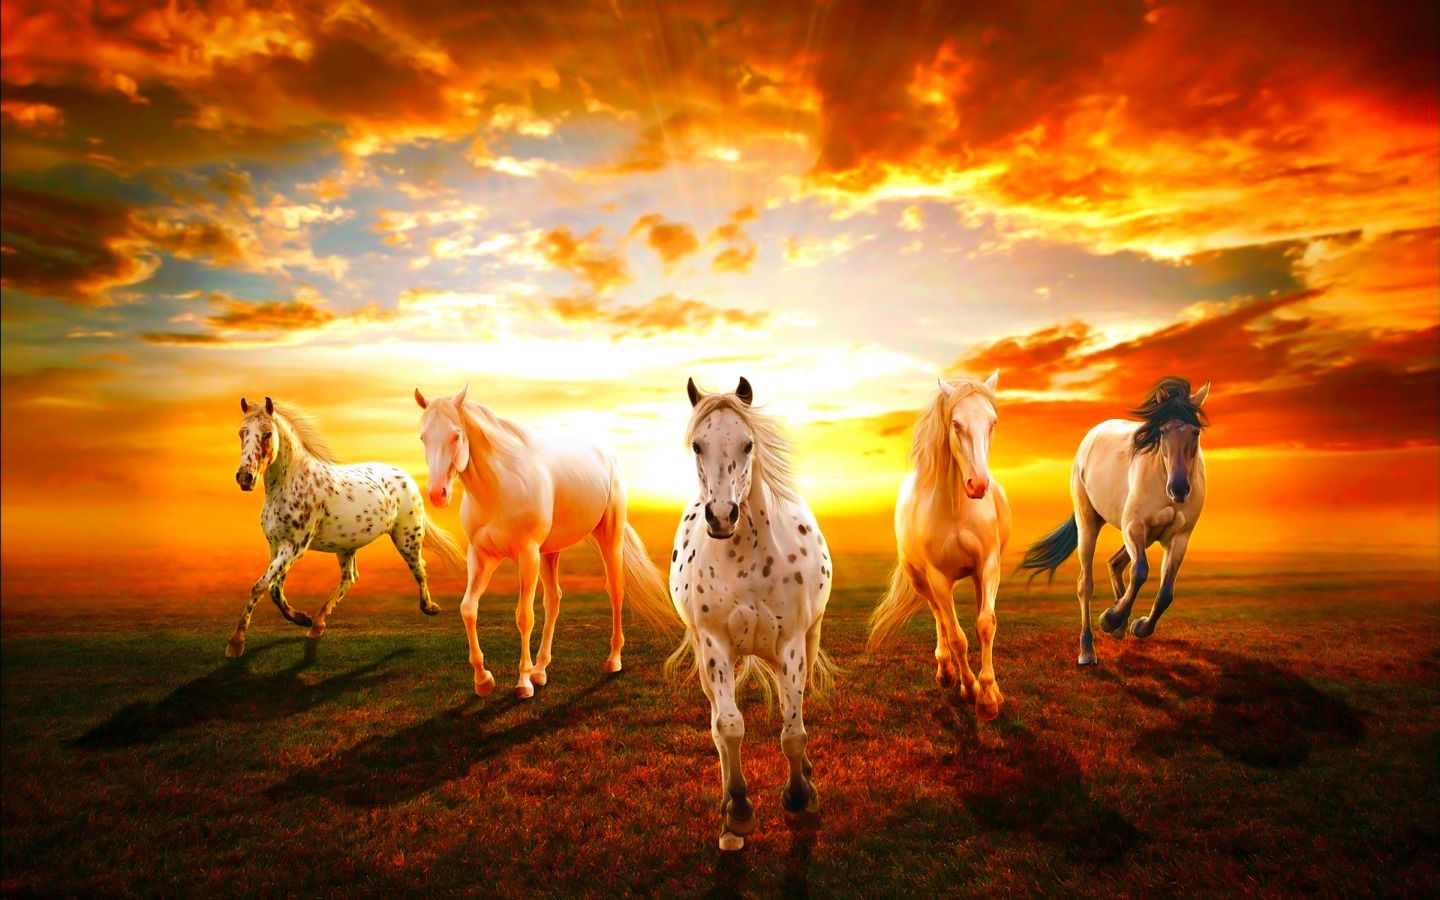 Free download Animals image Horses wallpaper photo 34360440